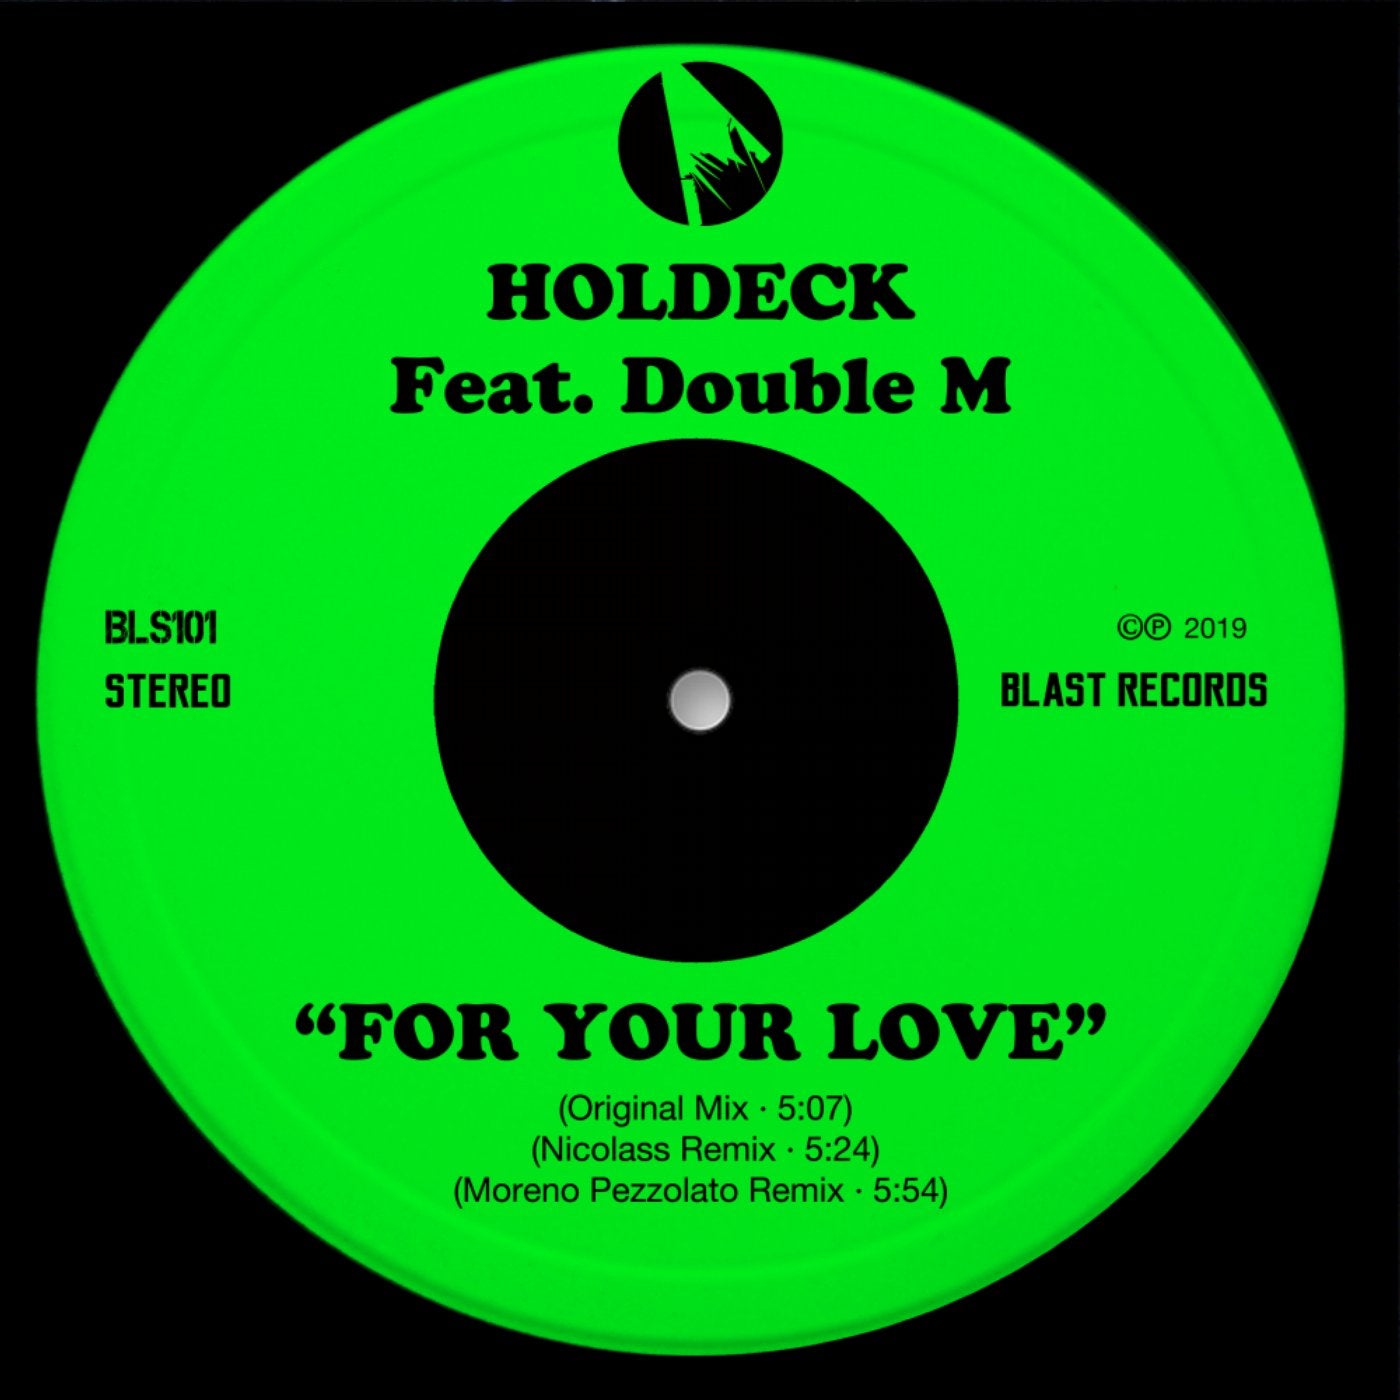 Holdeck music download - Beatport